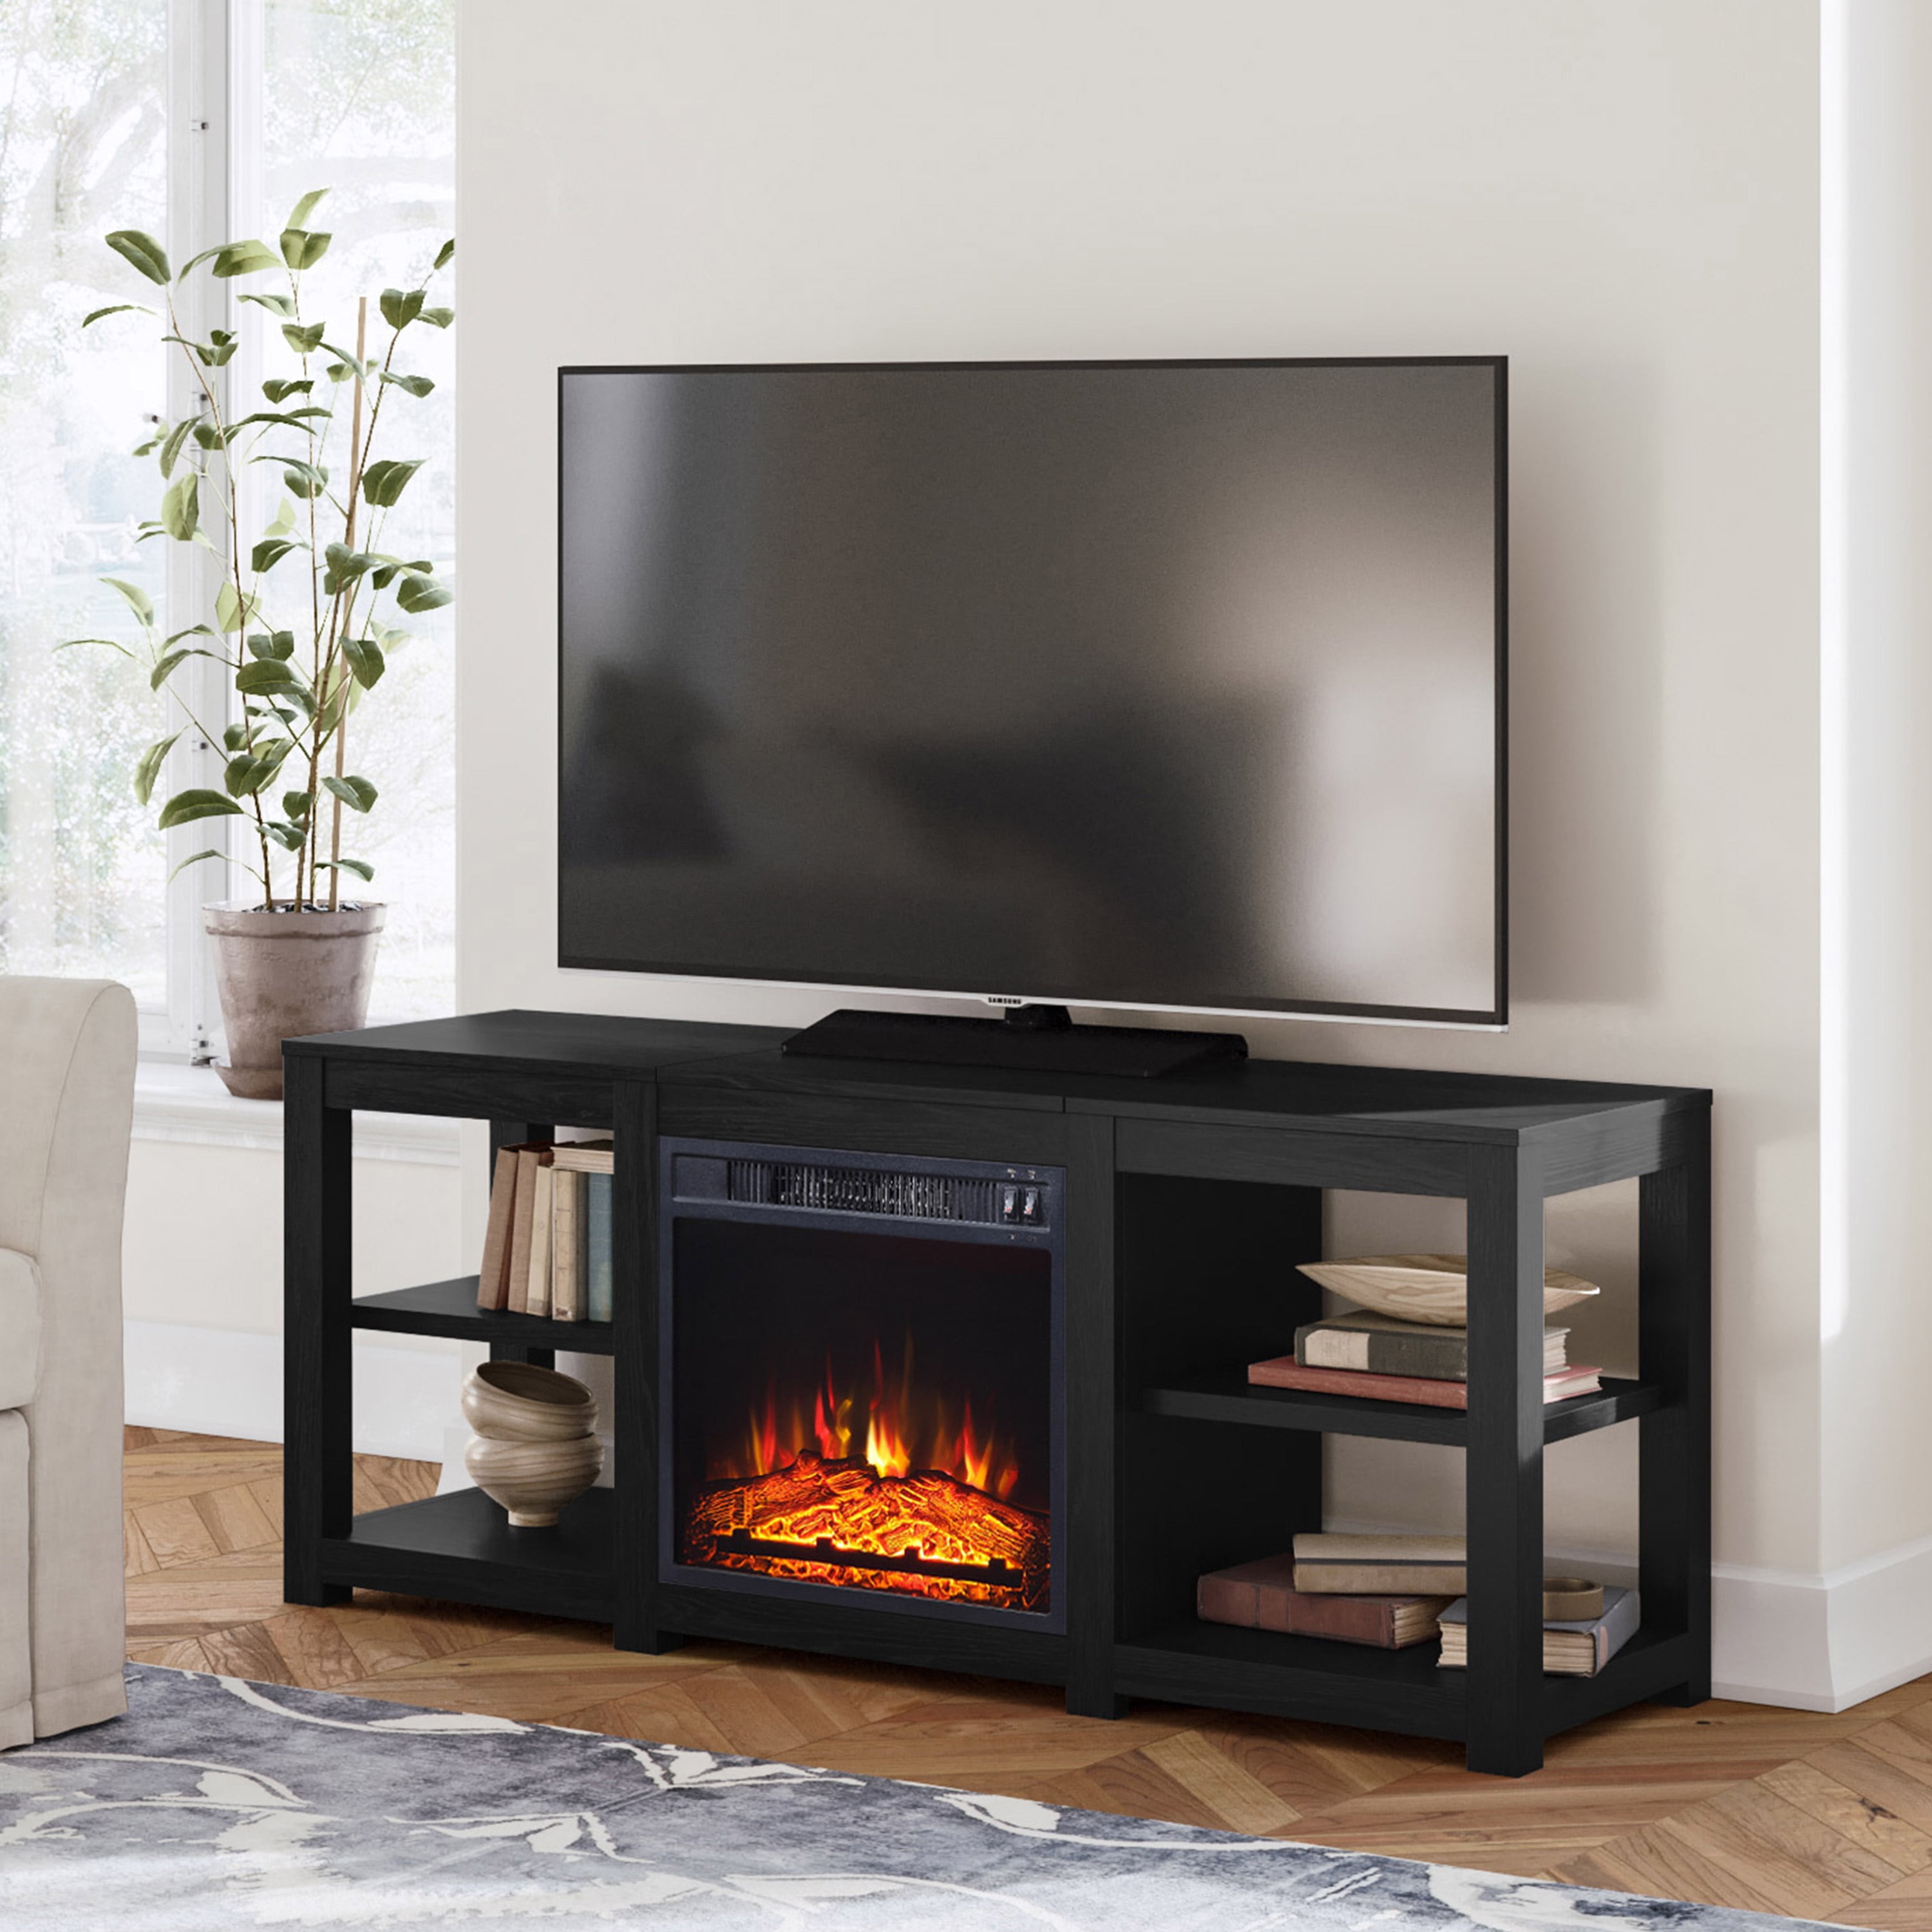 Black Oak Mainstays Fireplace TV Stand for TVs up to 65" for sale online 8620335WCOM 